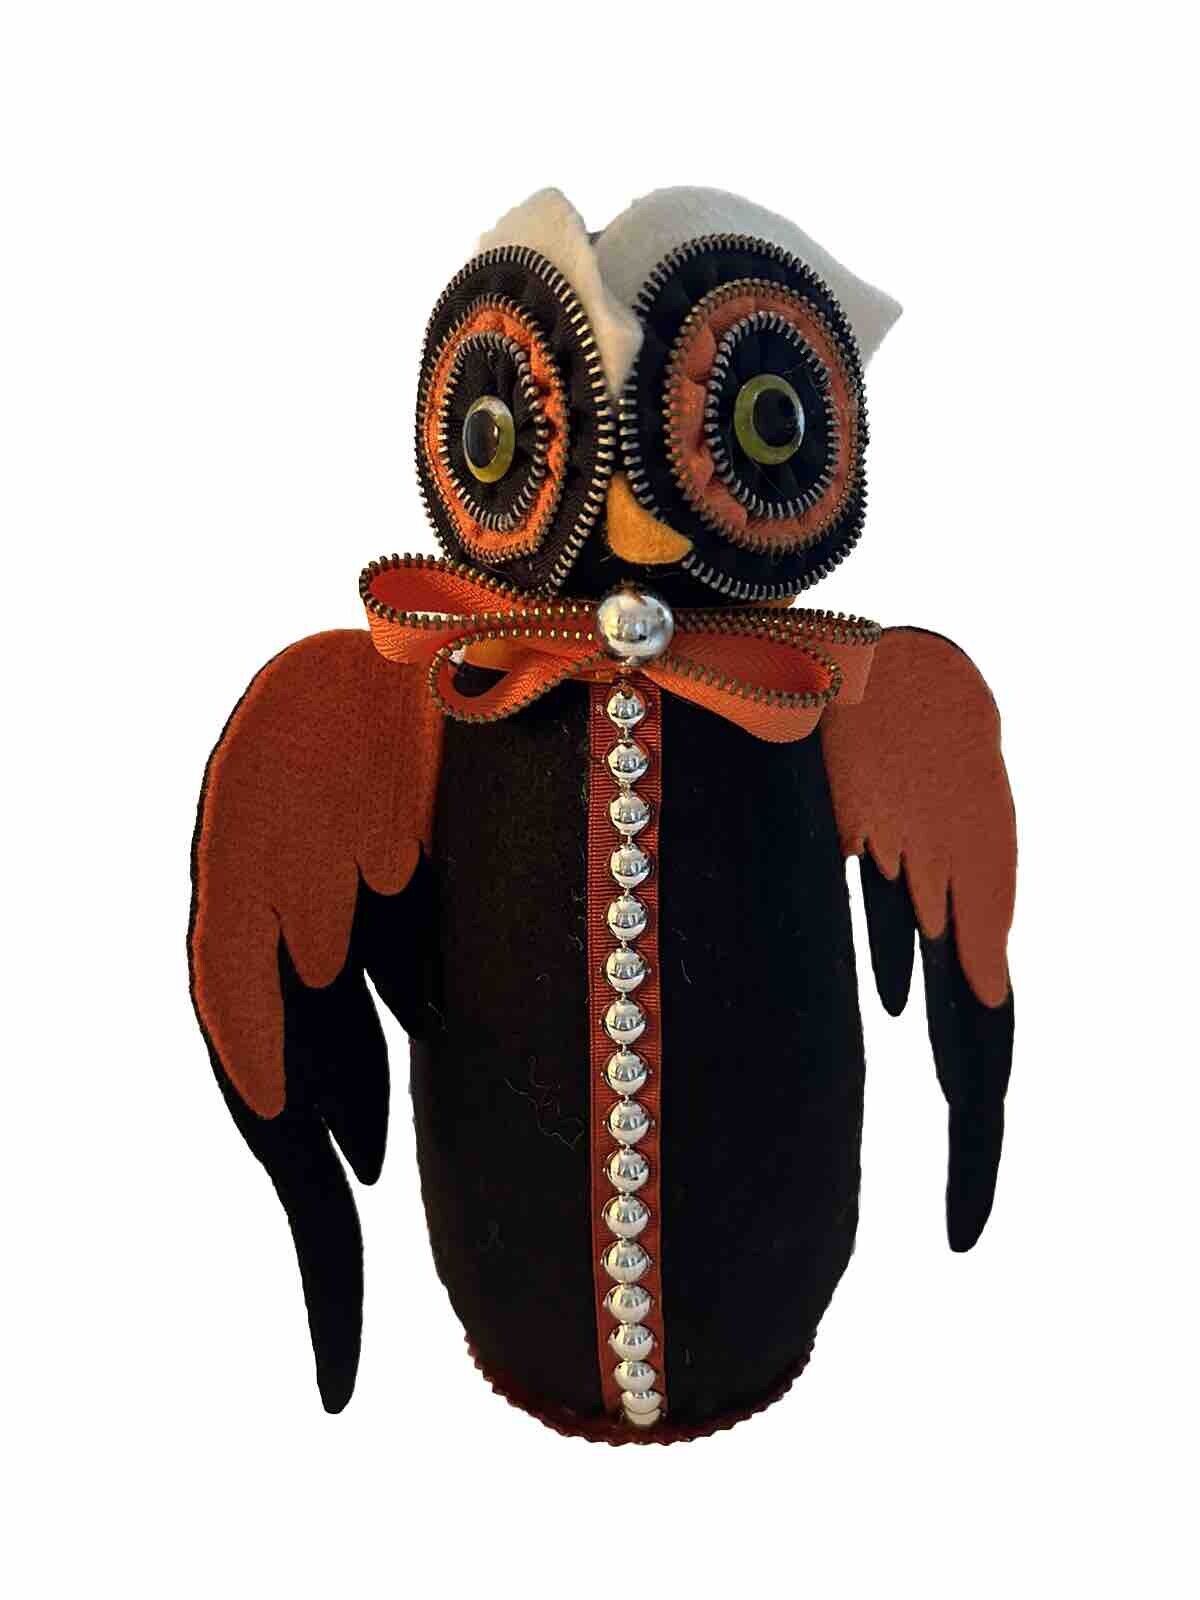 Owl Crafted Felt Halloween Melrose International 13 In. Vintage